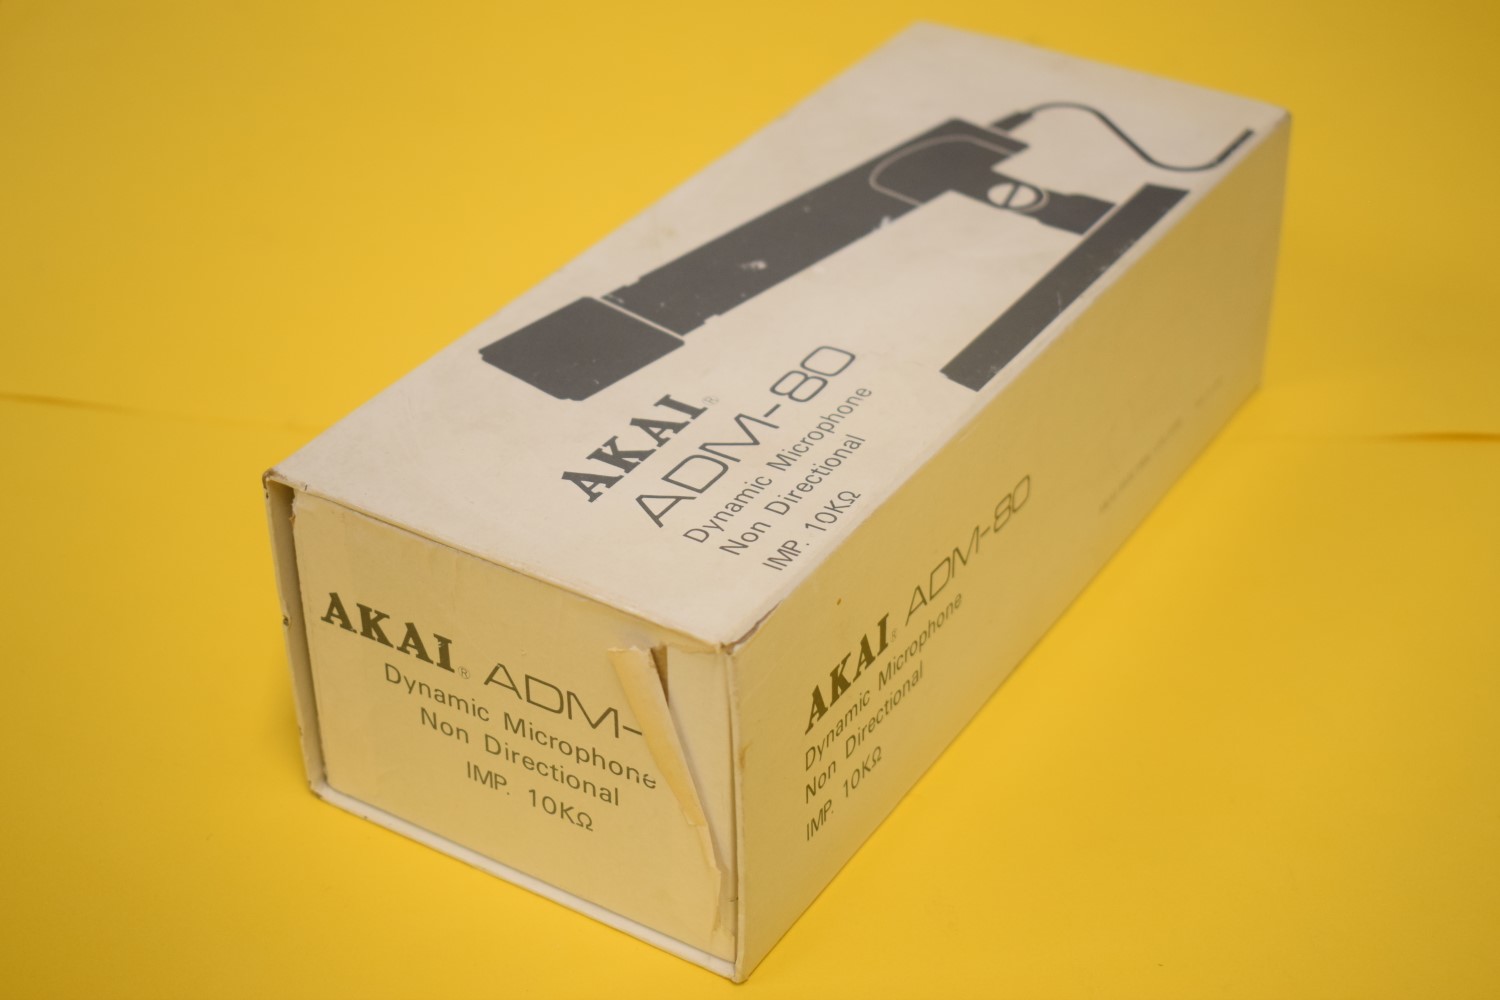 Akai ADM-80 Microfoon – Originele Verpakking